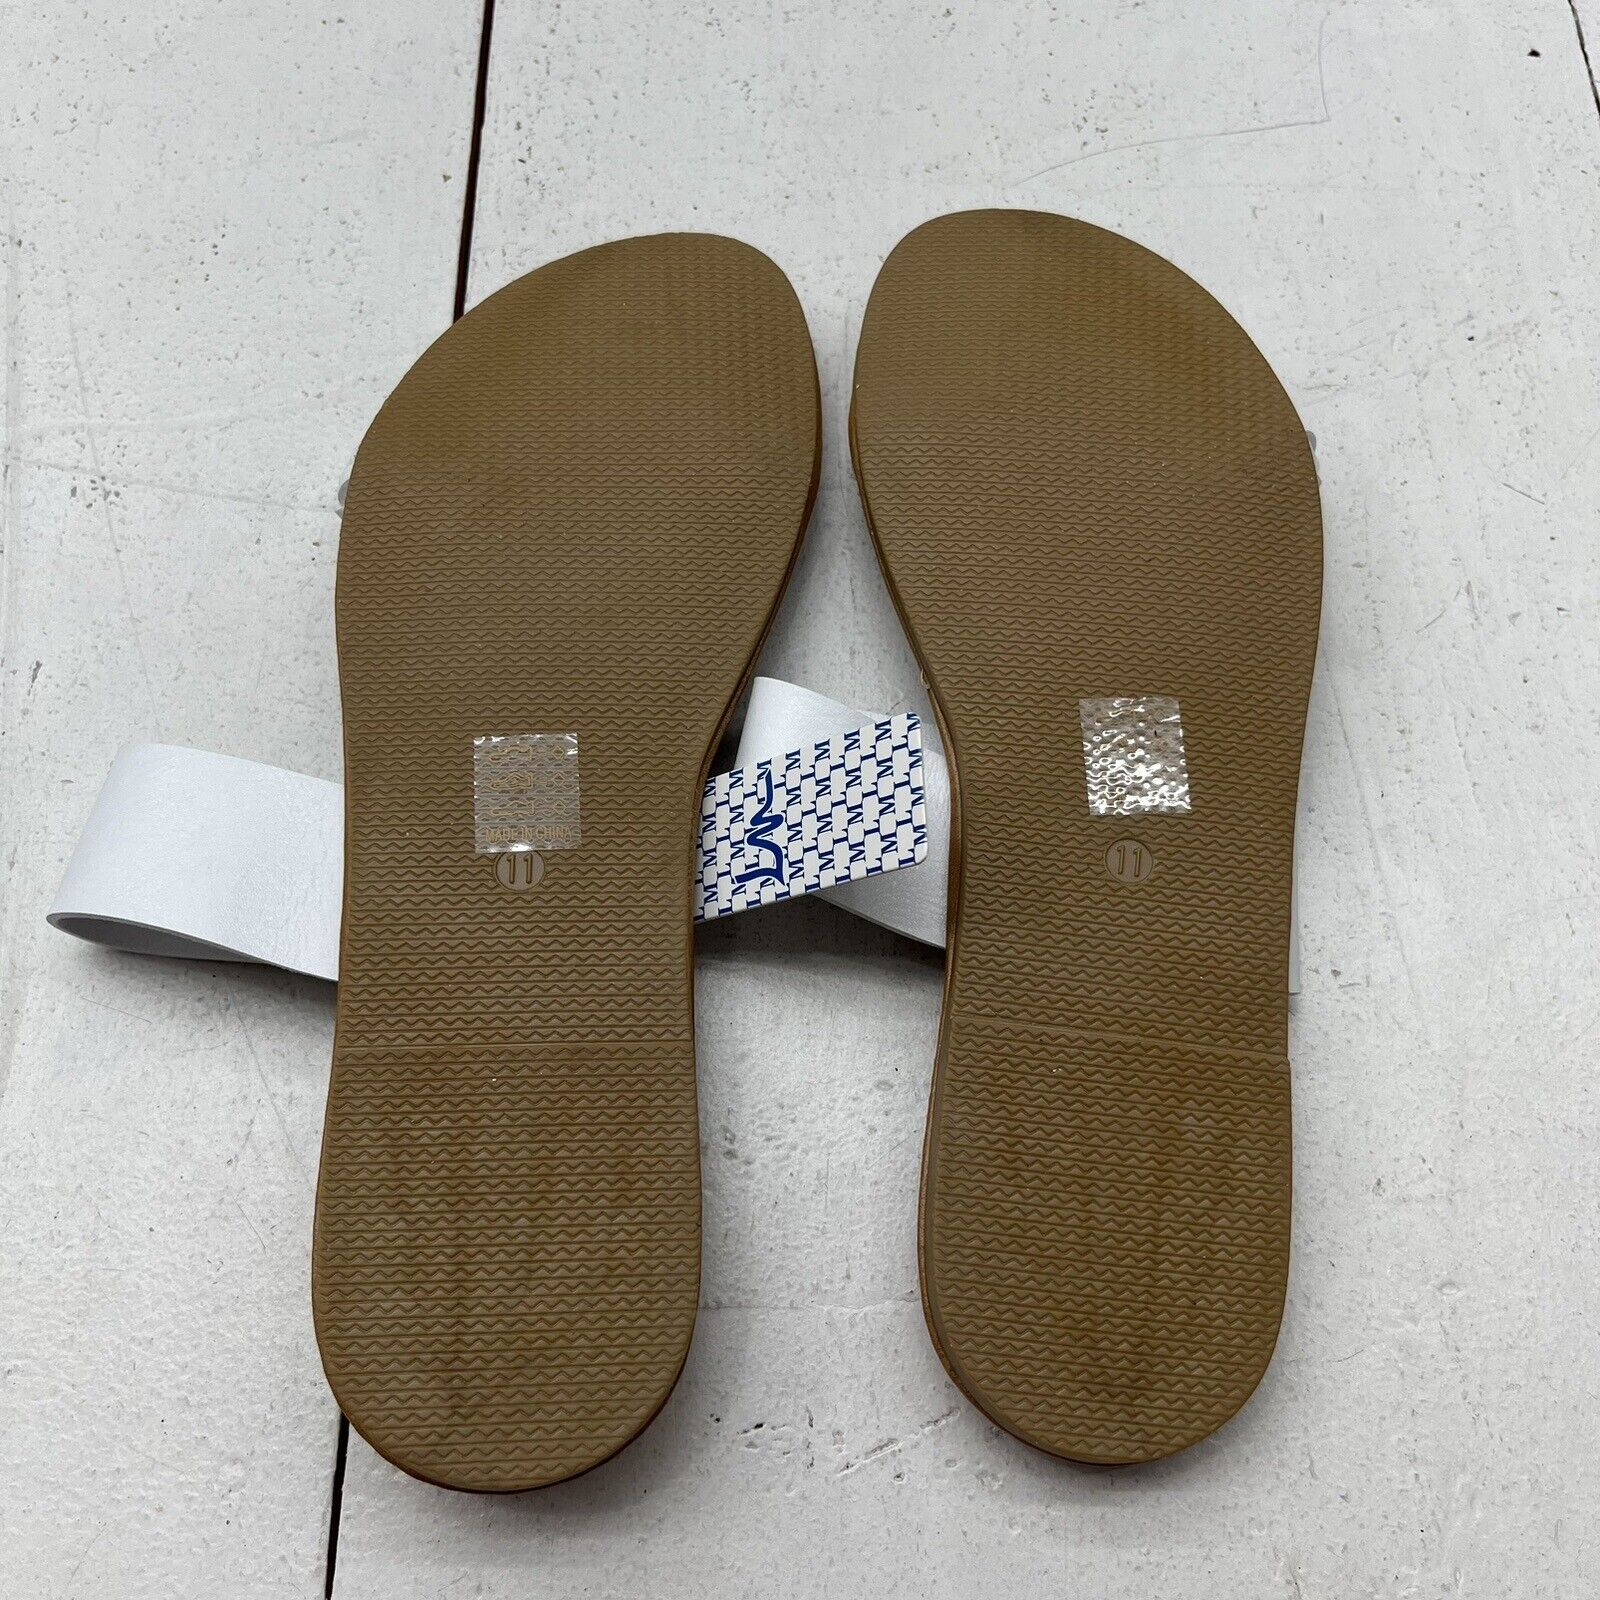 New Nike White Owaysis CK9283-100 Sport Sandal Women's Shoe Size 11